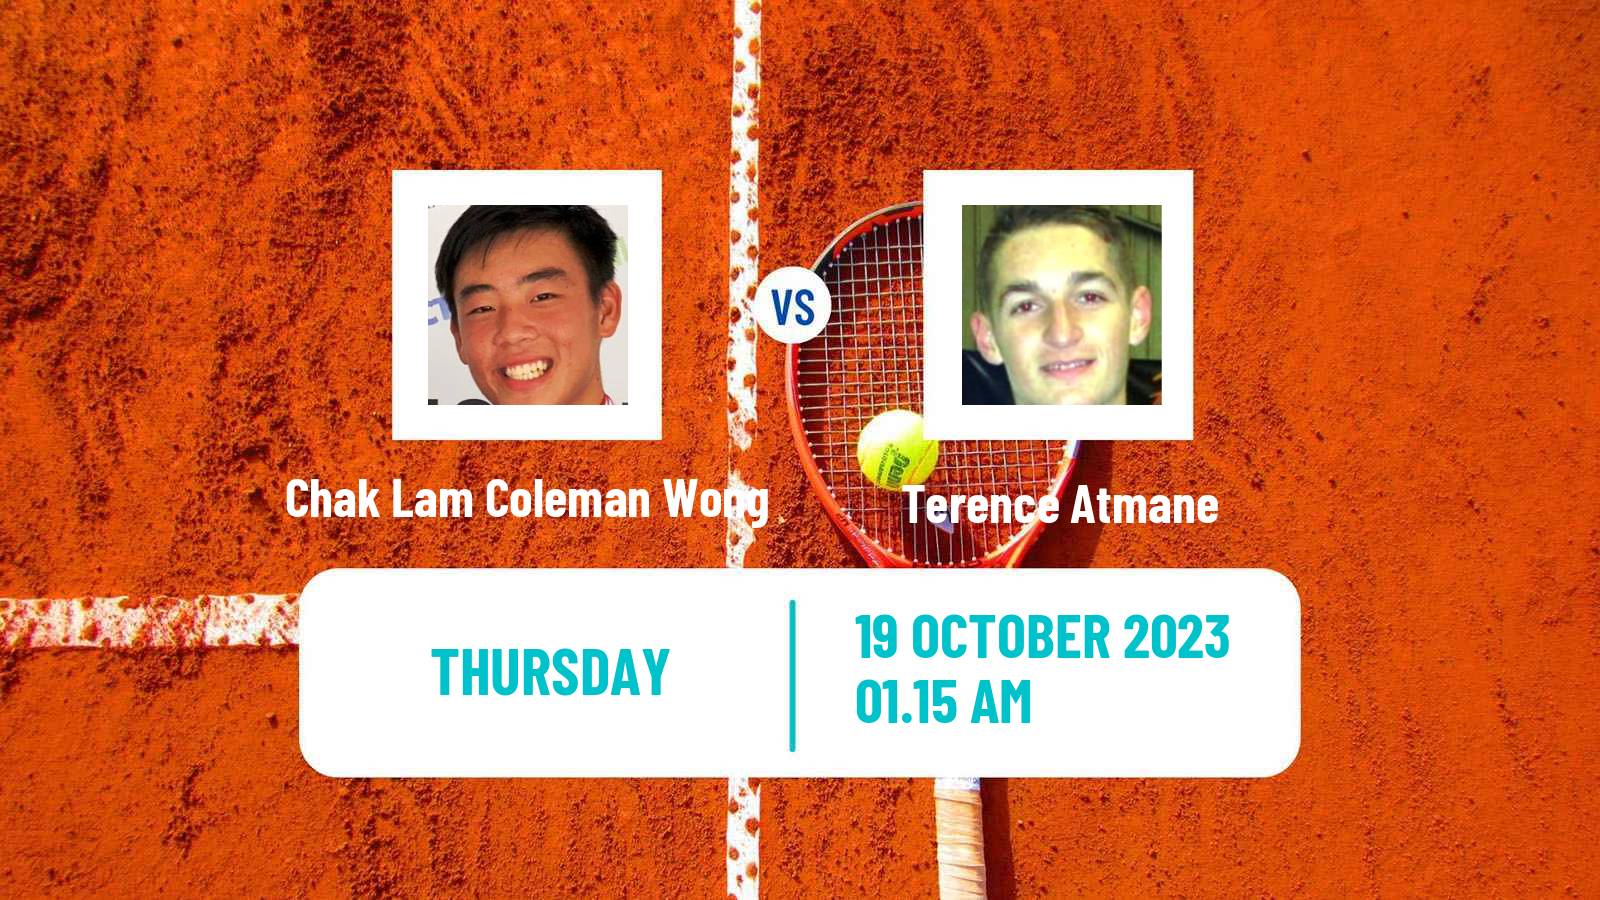 Tennis Shenzhen 3 Challenger Men Chak Lam Coleman Wong - Terence Atmane